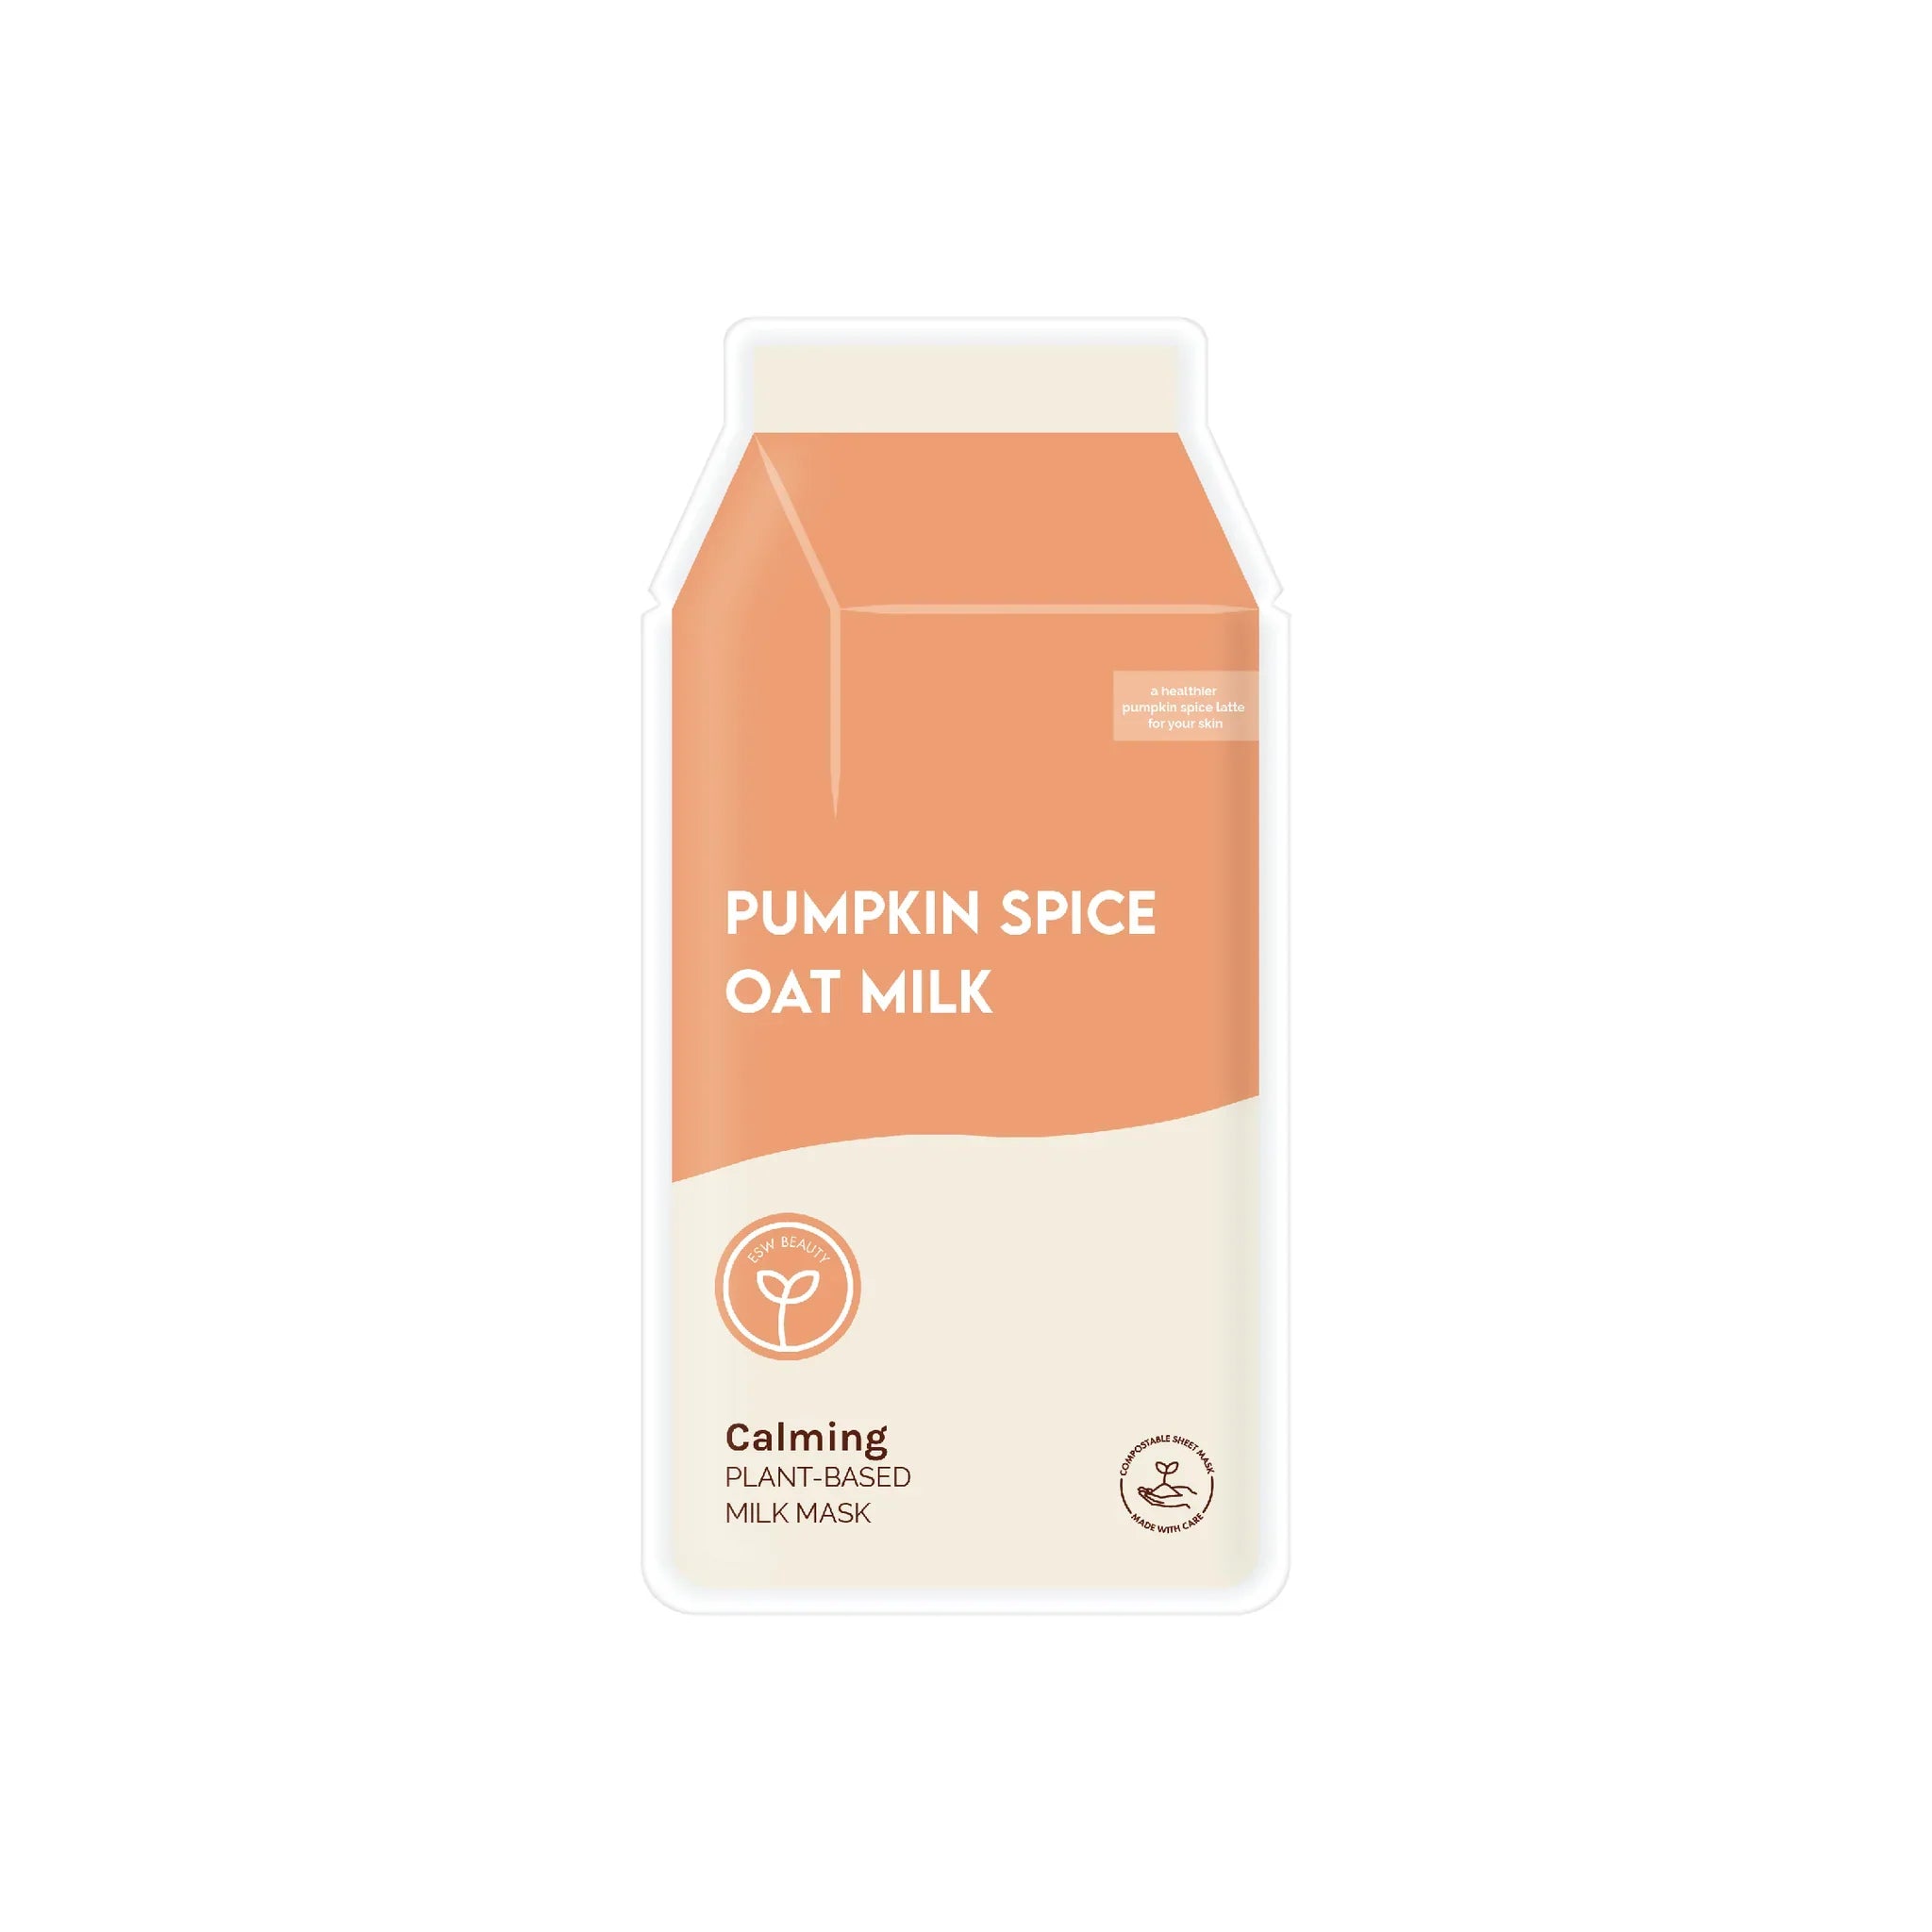 Pumpkin Spice Oat Milk Calming Plant-Based Milk Mask packaging on white background.